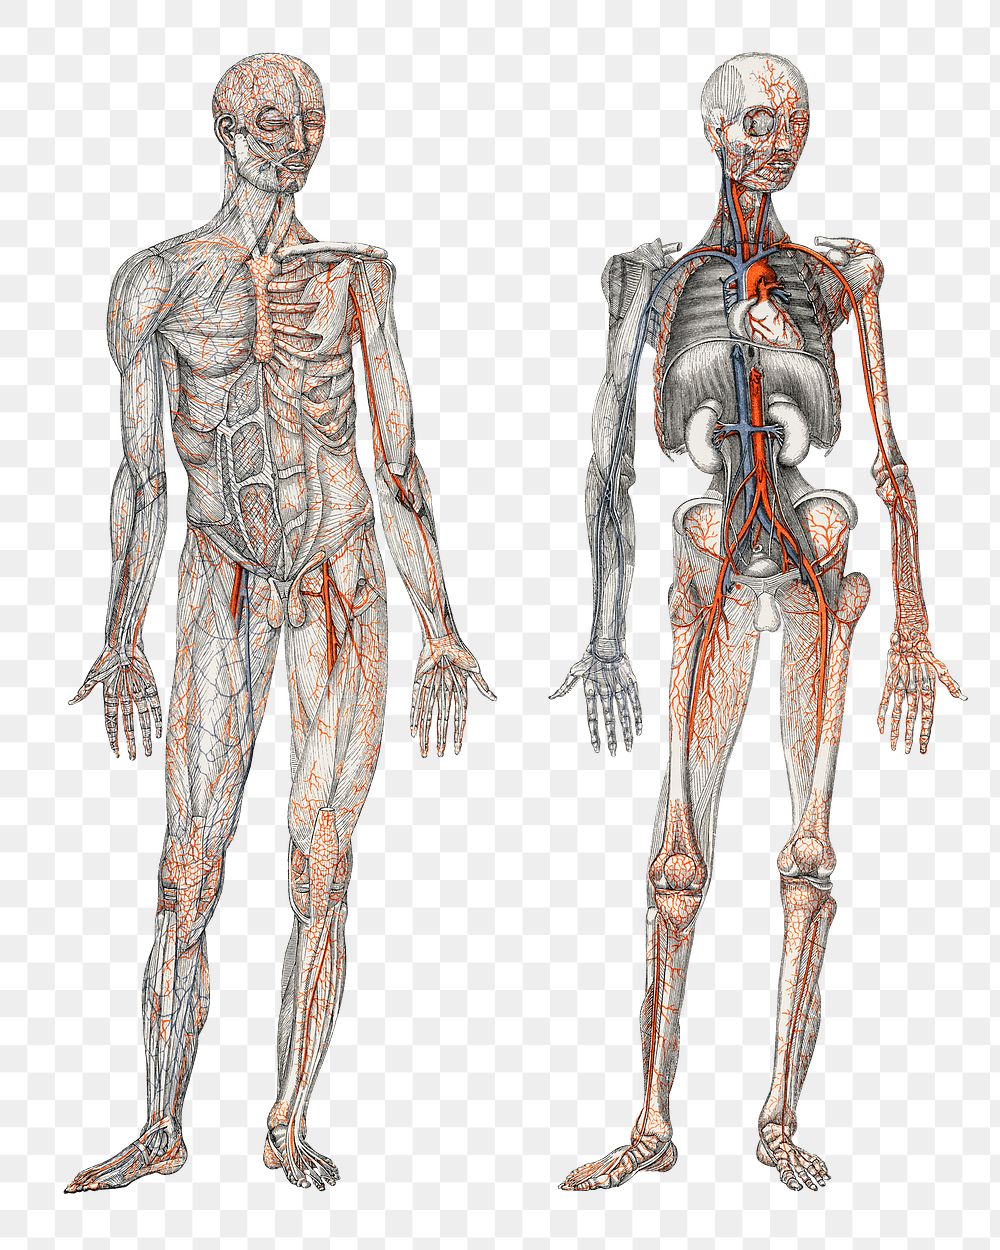 Human body png sticker, hand drawn illustration, transparent background